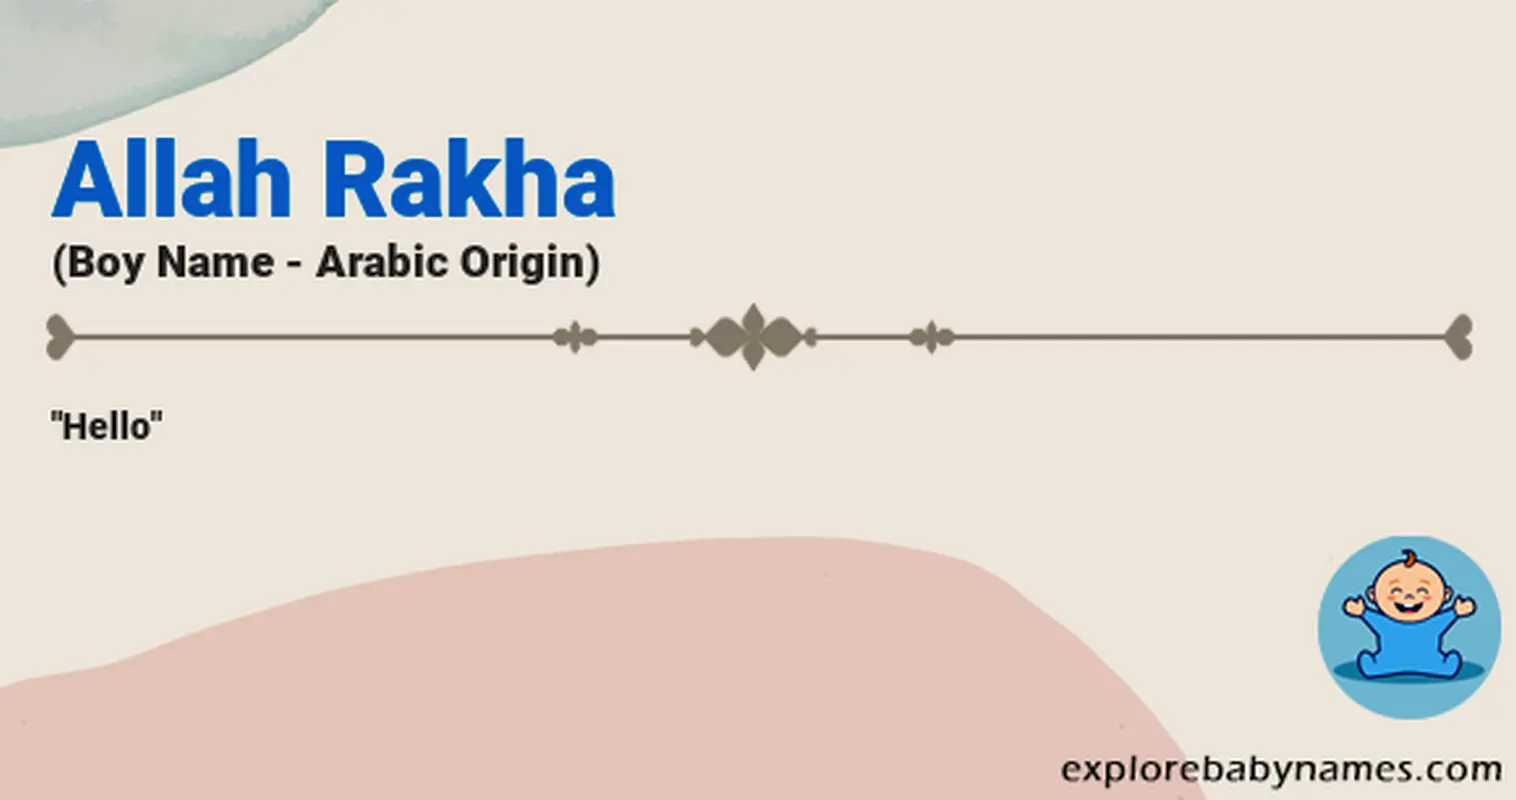 Meaning of Allah Rakha